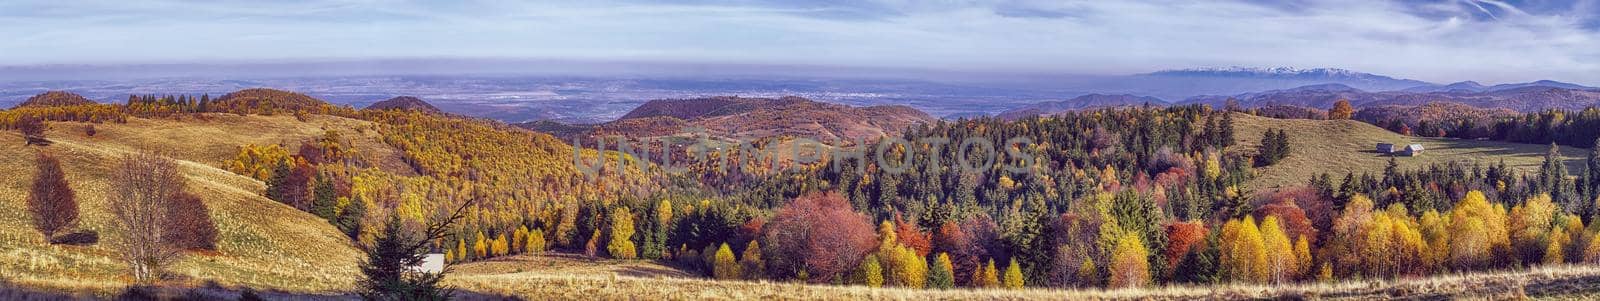 hills in the fall season, Fantanele village, Sibiu county, Cindrel mountains, 1100m, Romania